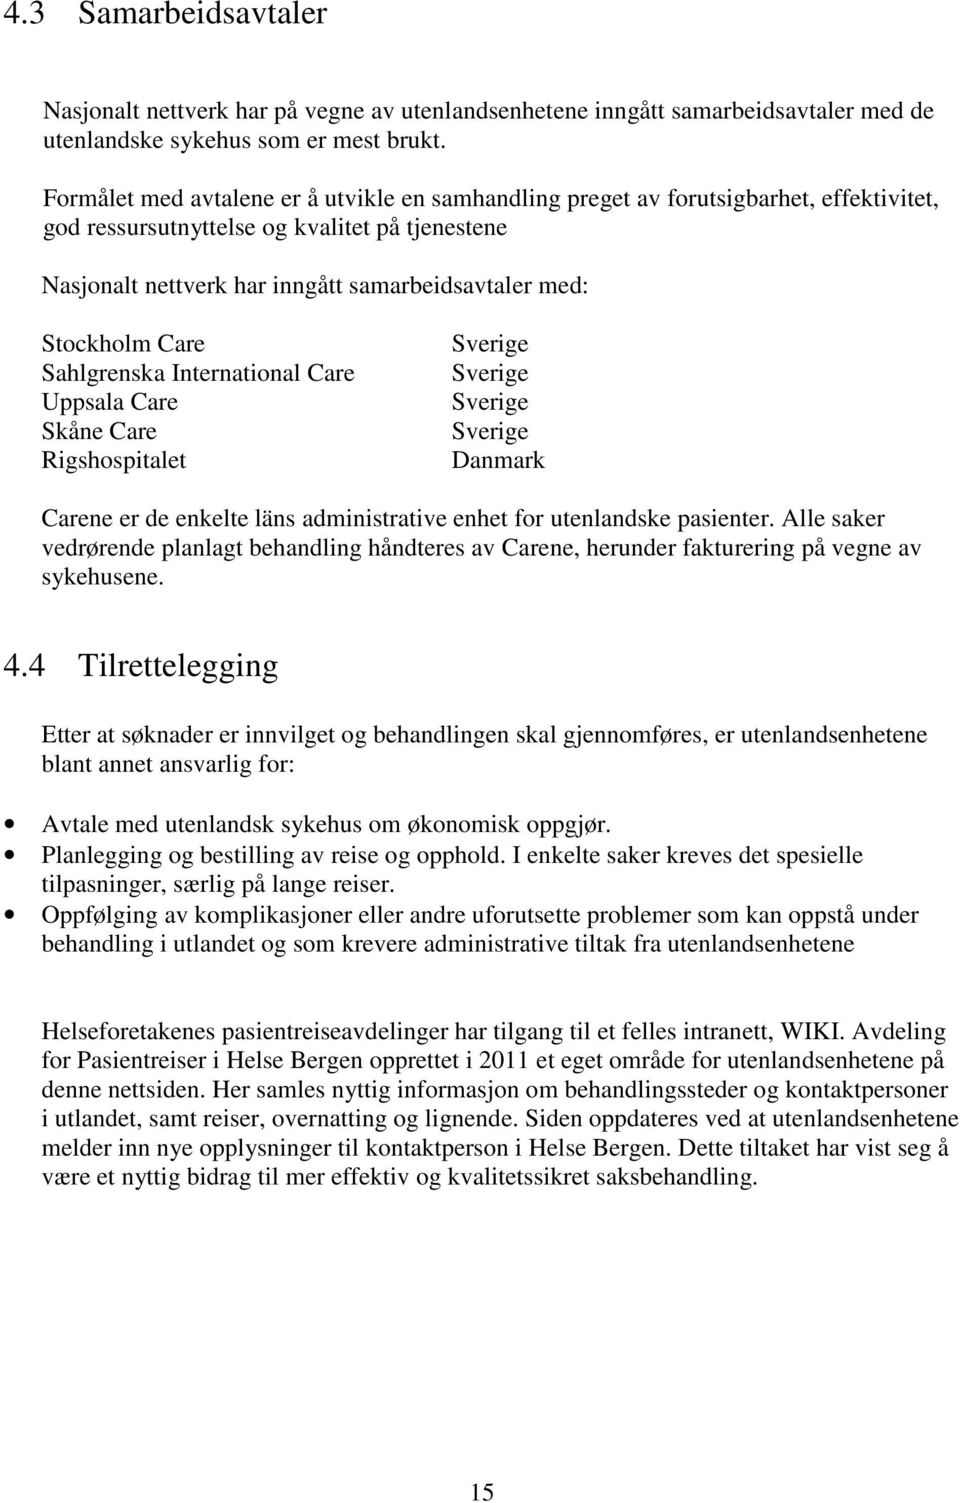 Stockholm Care Sahlgrenska International Care Uppsala Care Skåne Care Rigshospitalet Sverige Sverige Sverige Sverige Danmark Carene er de enkelte läns administrative enhet for utenlandske pasienter.